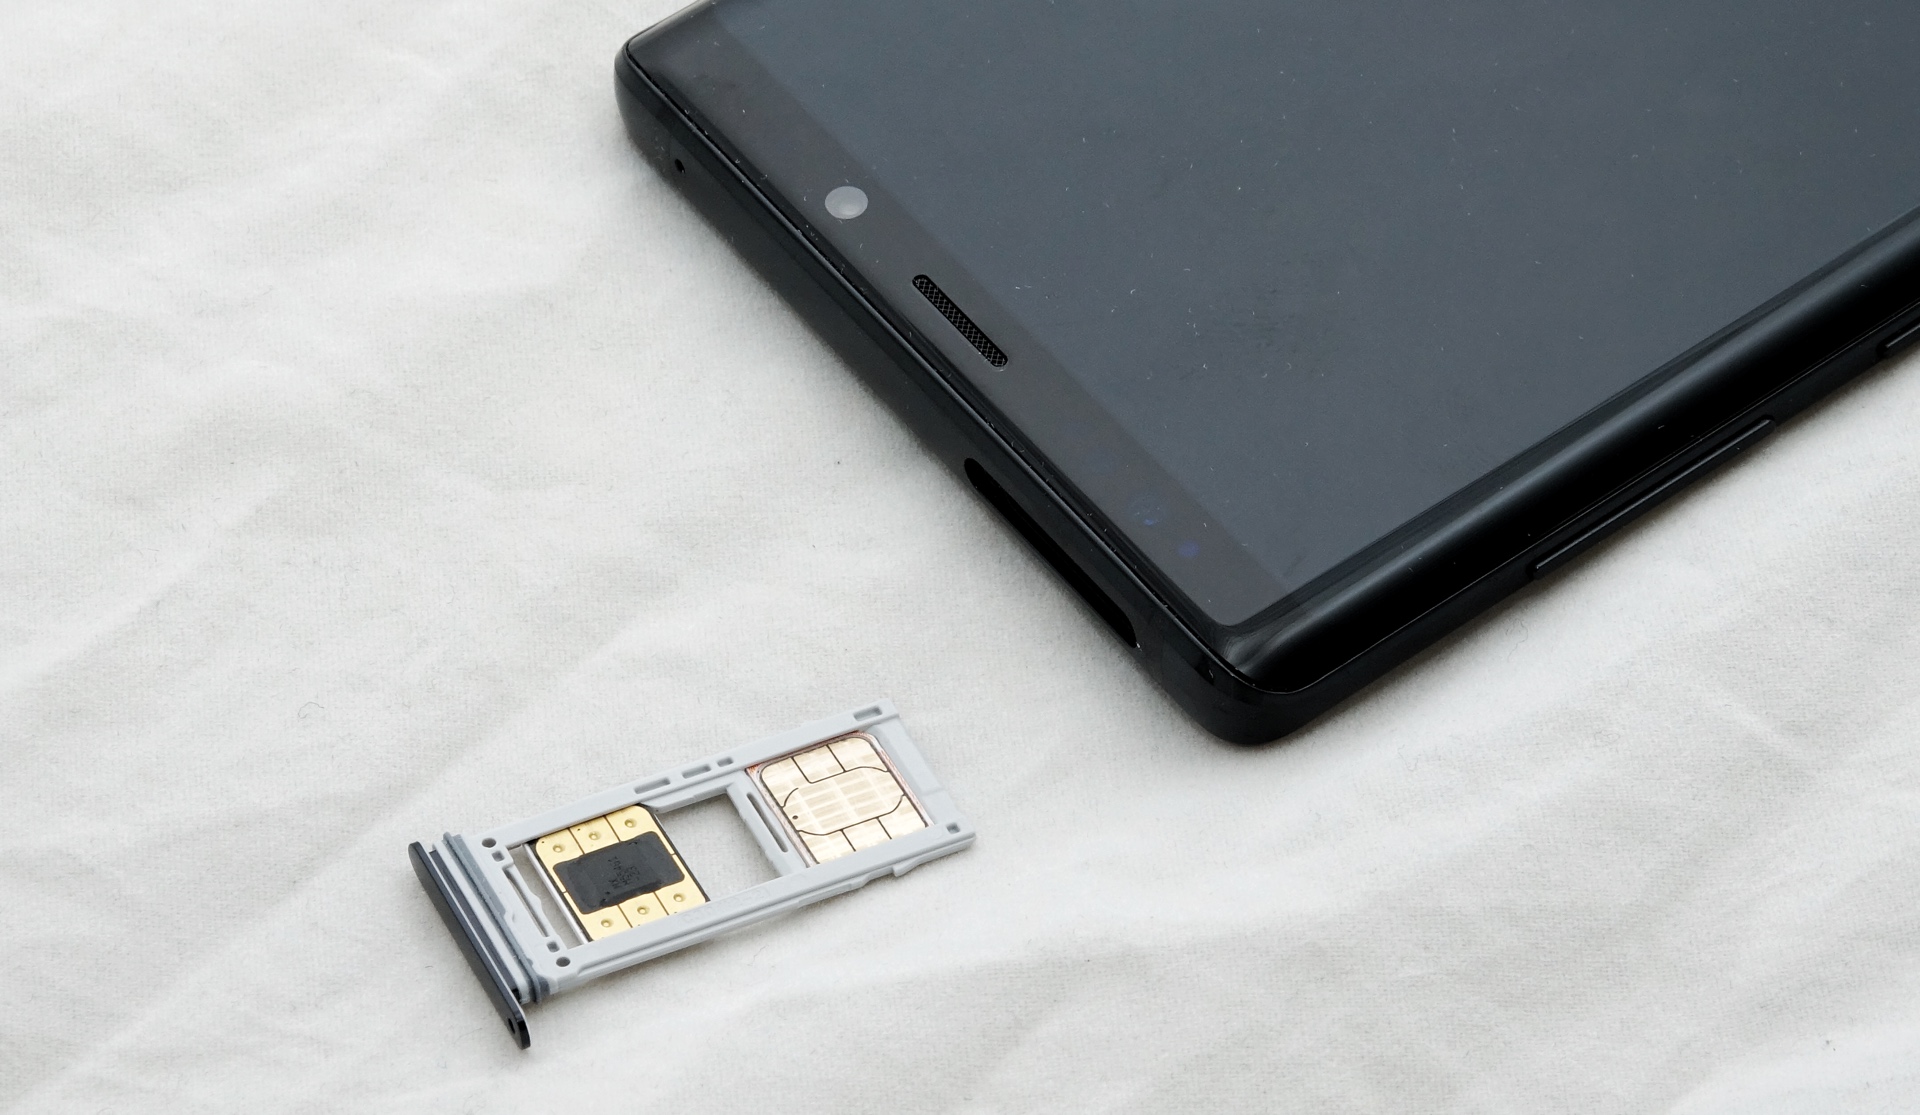 Samsung Galaxy Note 9 dual SIM slot / microSD expansion